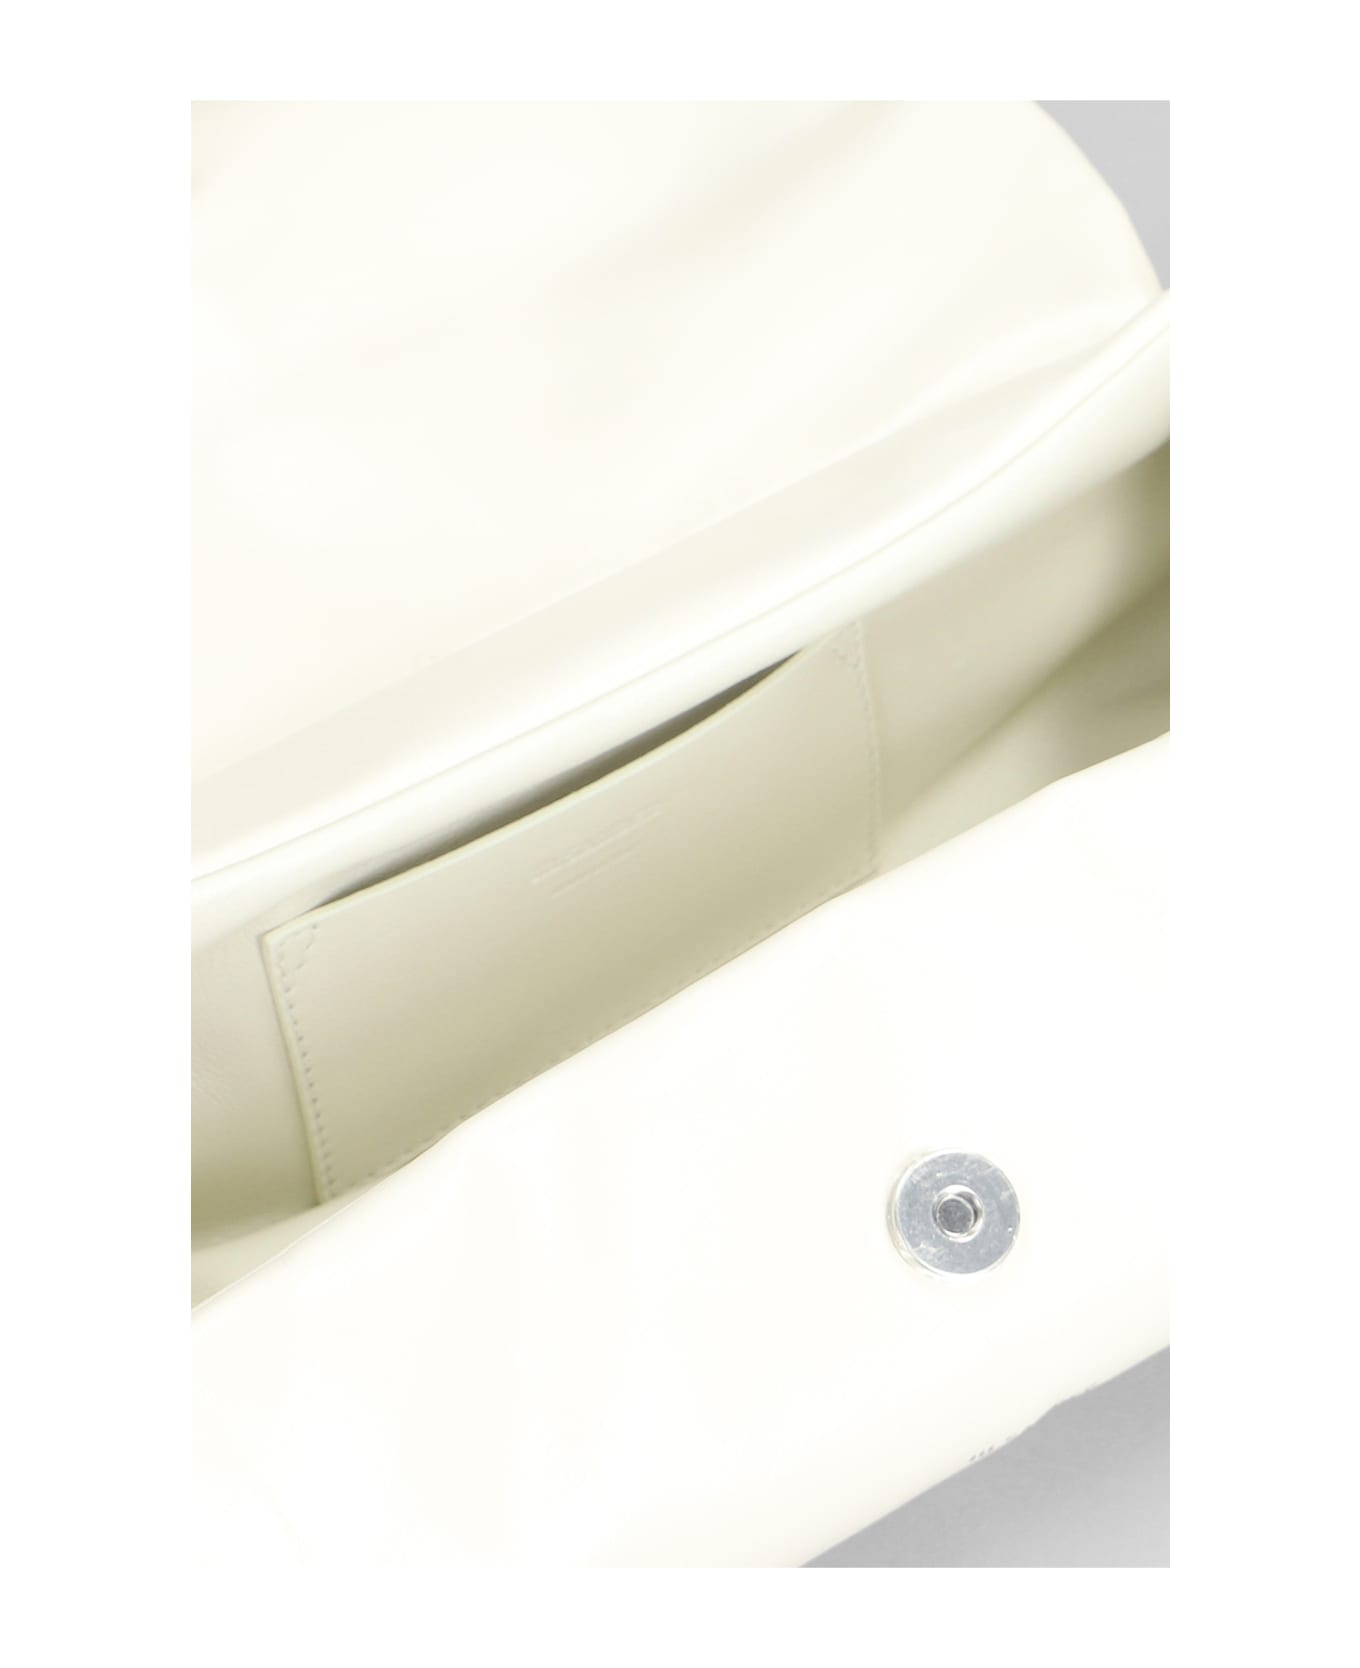 Jil Sander Cannolo Grande Shoulder Bag In White Leather - Eggshell ショルダーバッグ